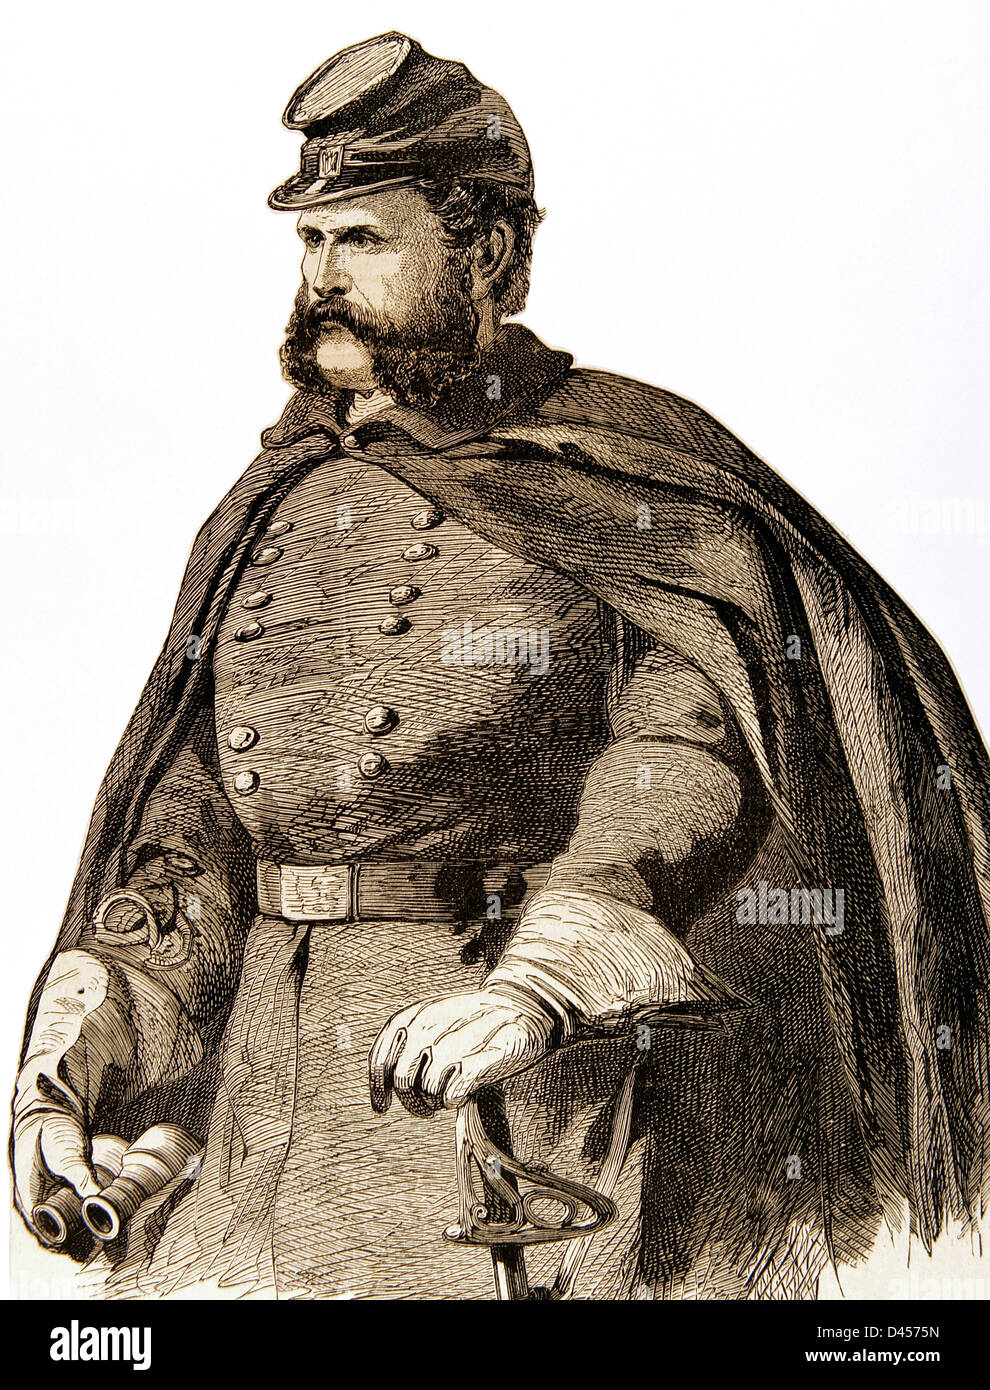 Ambrose Everett Burnside (1824-1881). US-Militärs. Gravur in der Weltgeschichte, 1863. Stockfoto